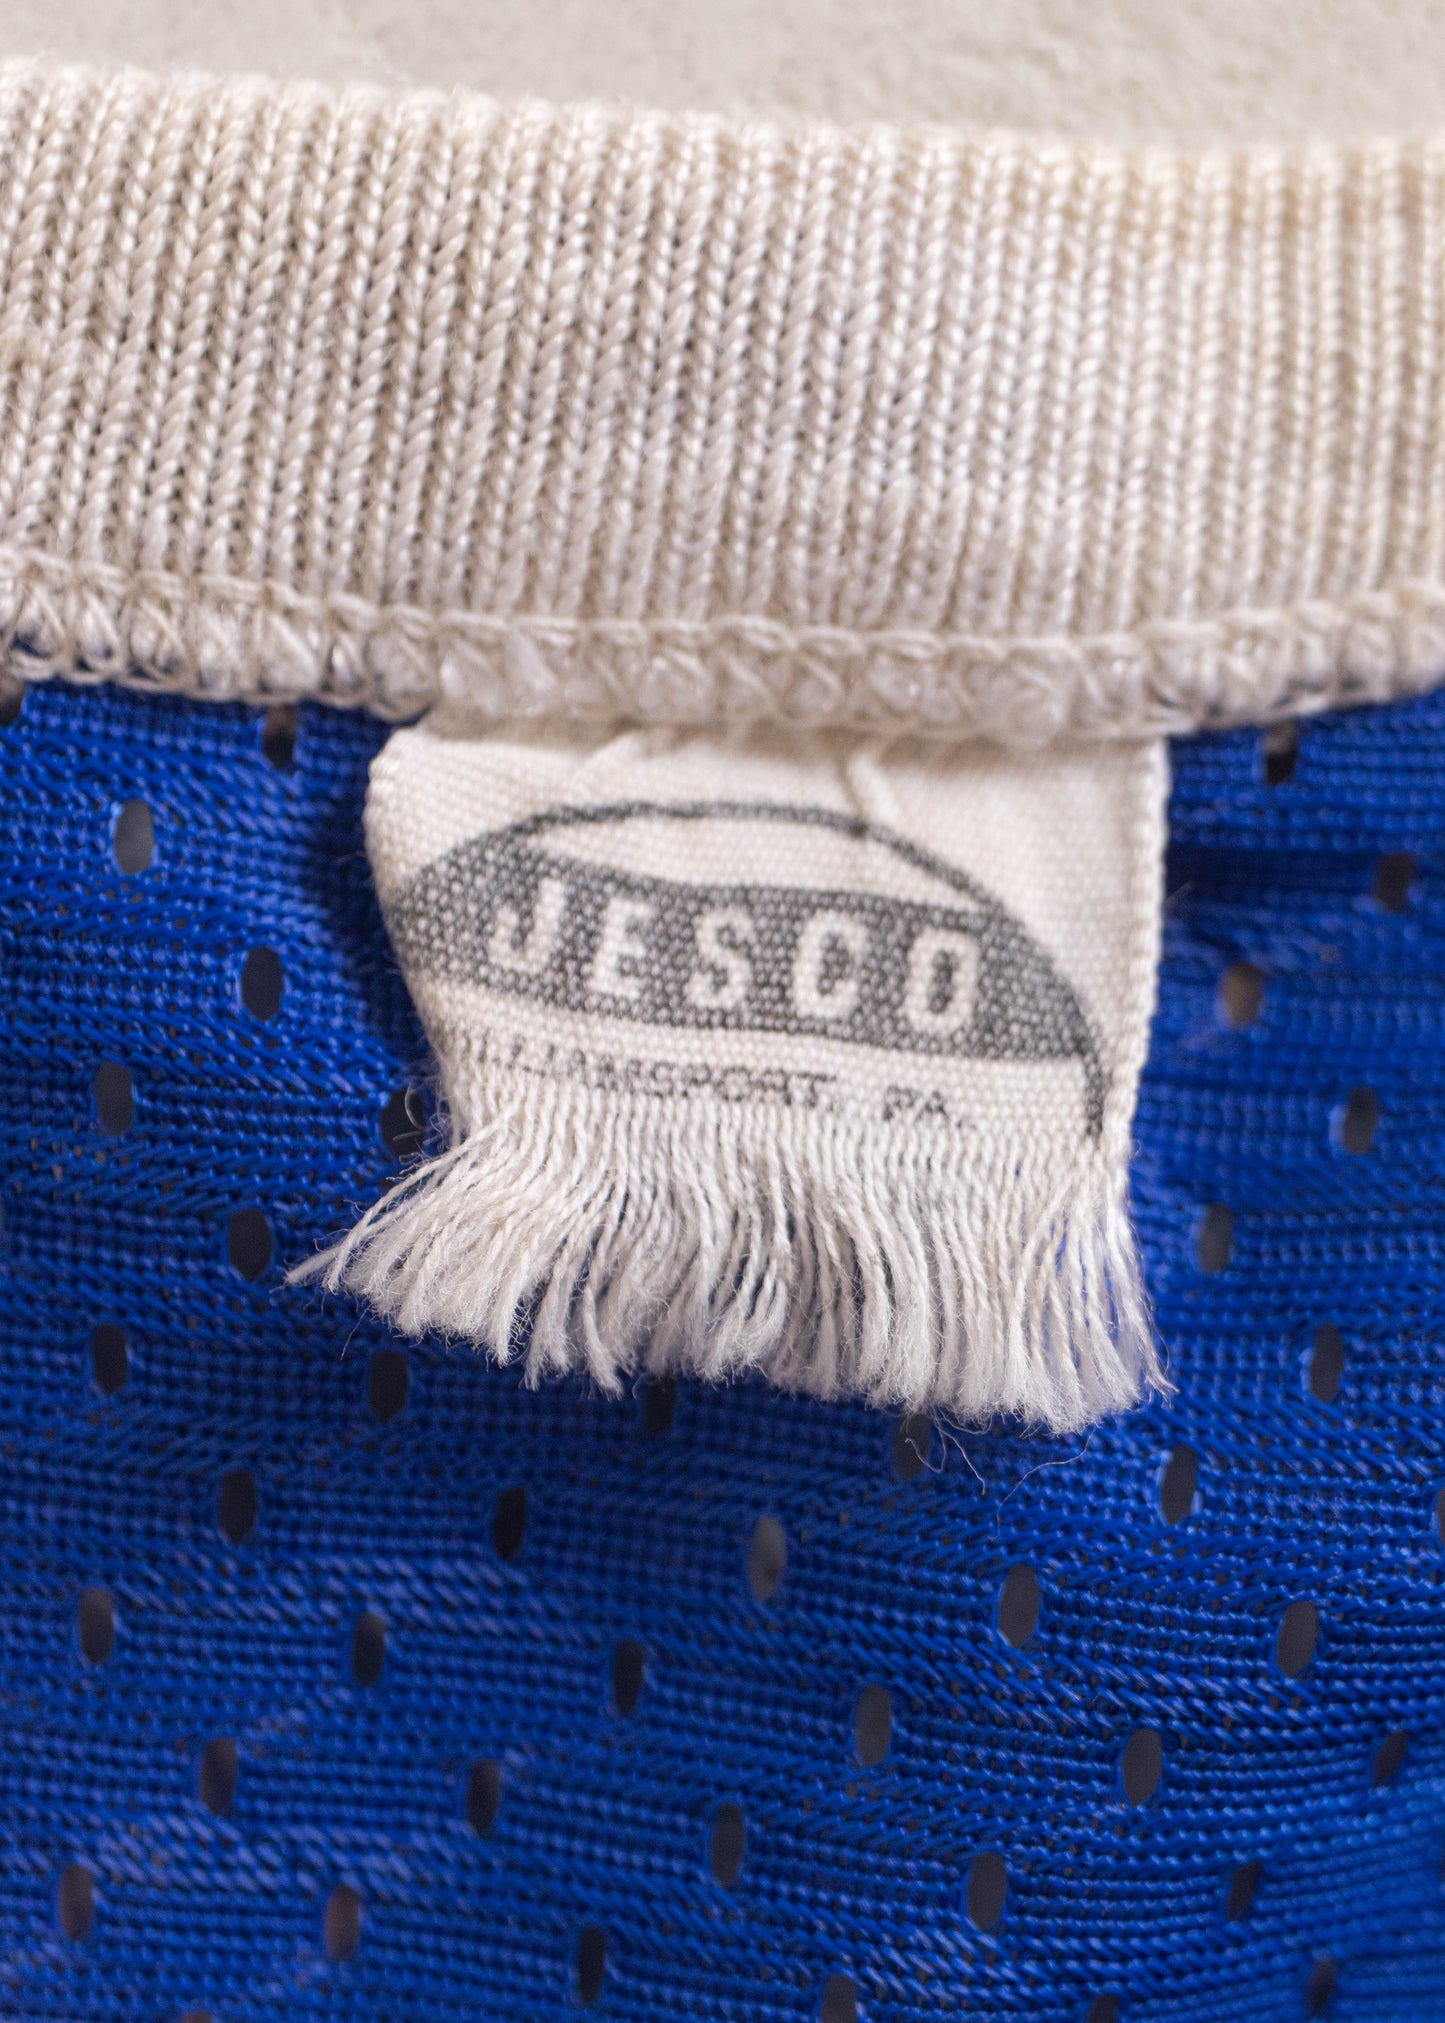 Vintage 1980s Jesco Sportsman Shop Mesh Sport Jersey Size S/M